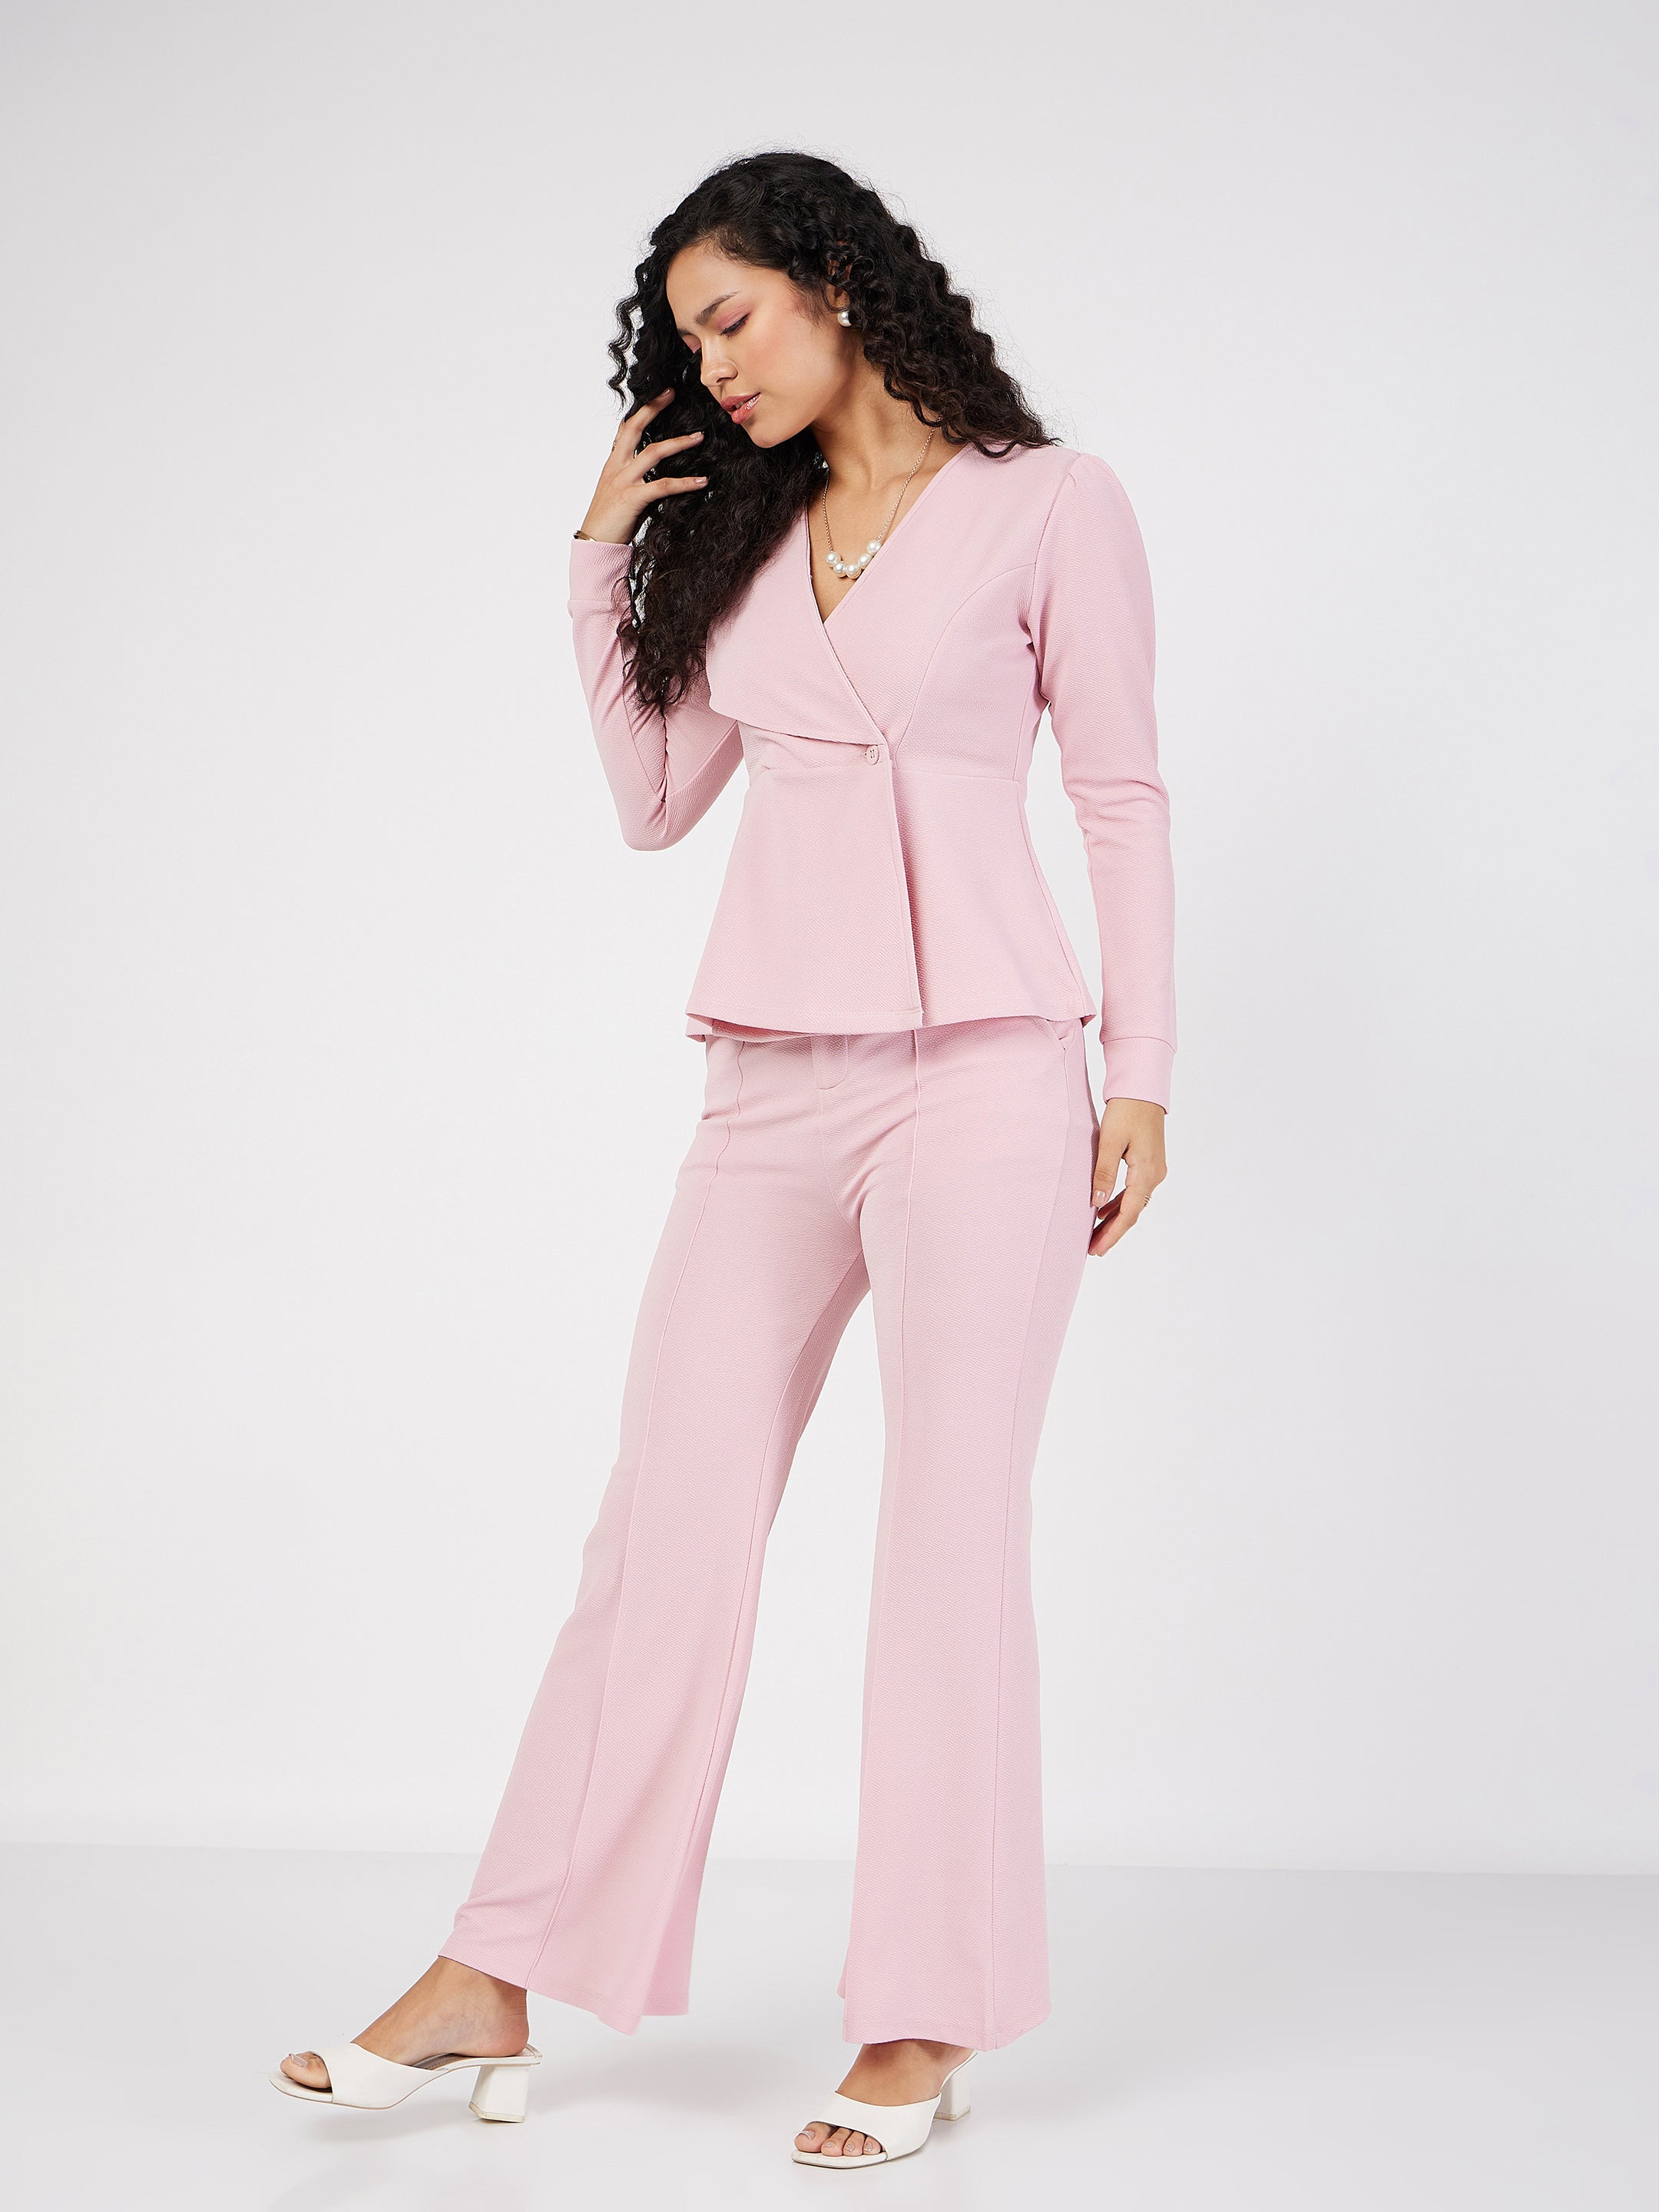 Women's Pink Wrap Peplum Top With Bellbottom Pants - Lyush